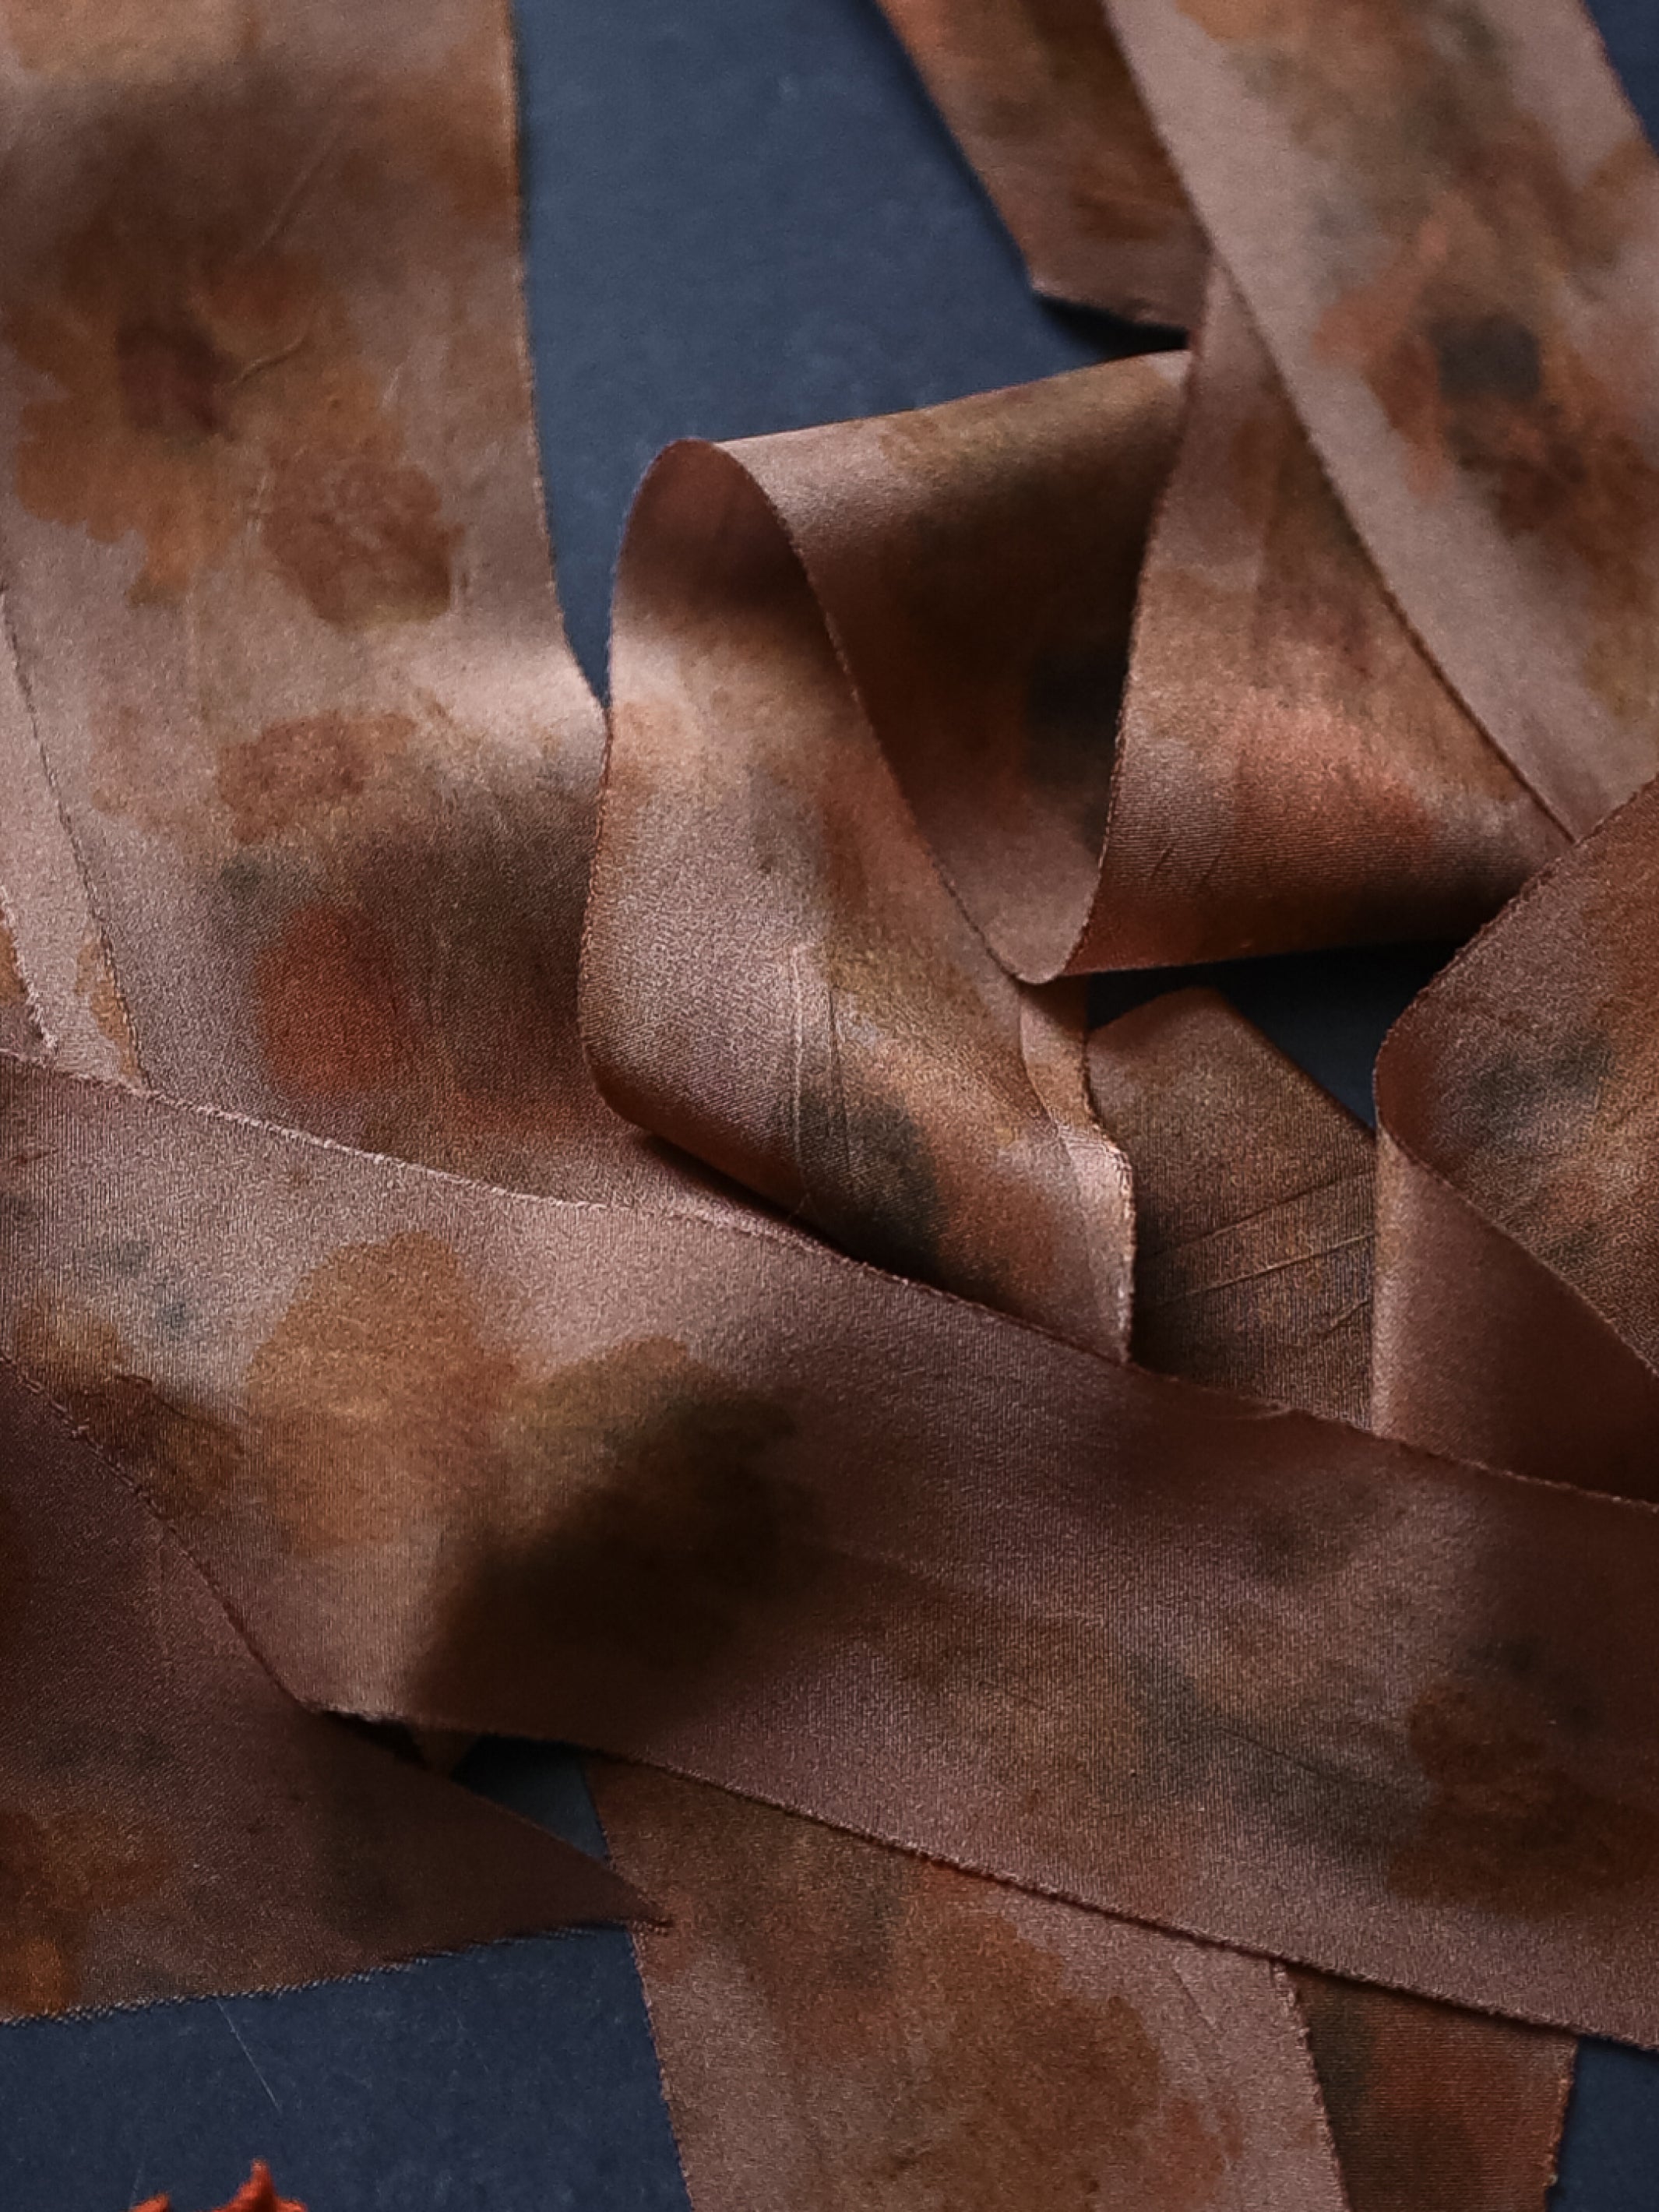 Romance Silk Ribbon Collection - British organic silk ribbon dyed